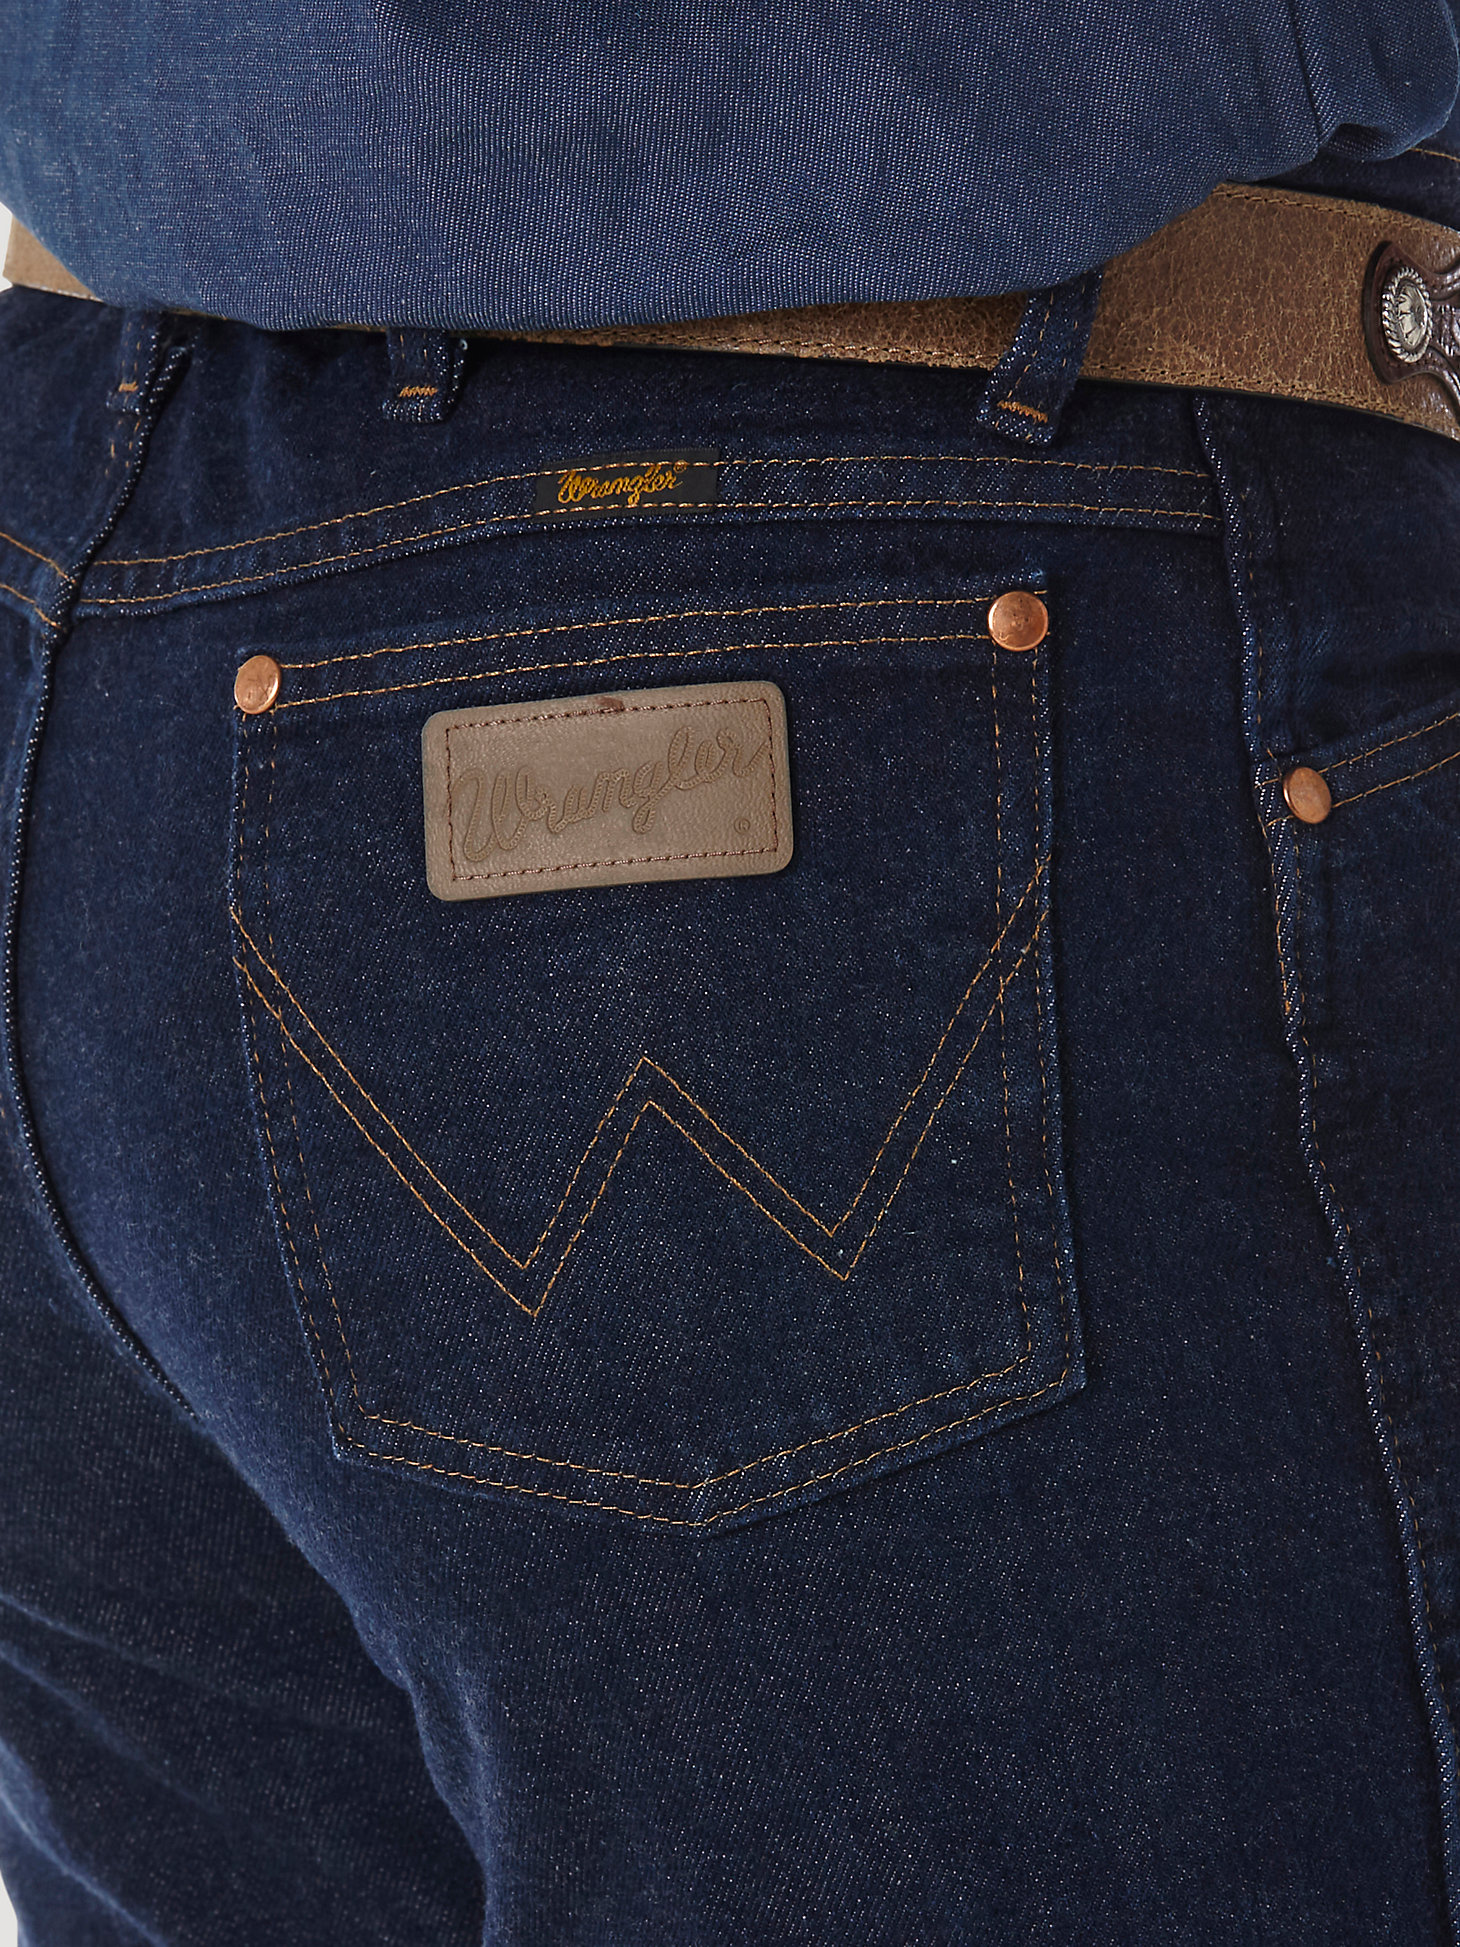 Wrangler® Cowboy Cut® Navy Stretch Slim Fit Jean in Navy alternative view 3